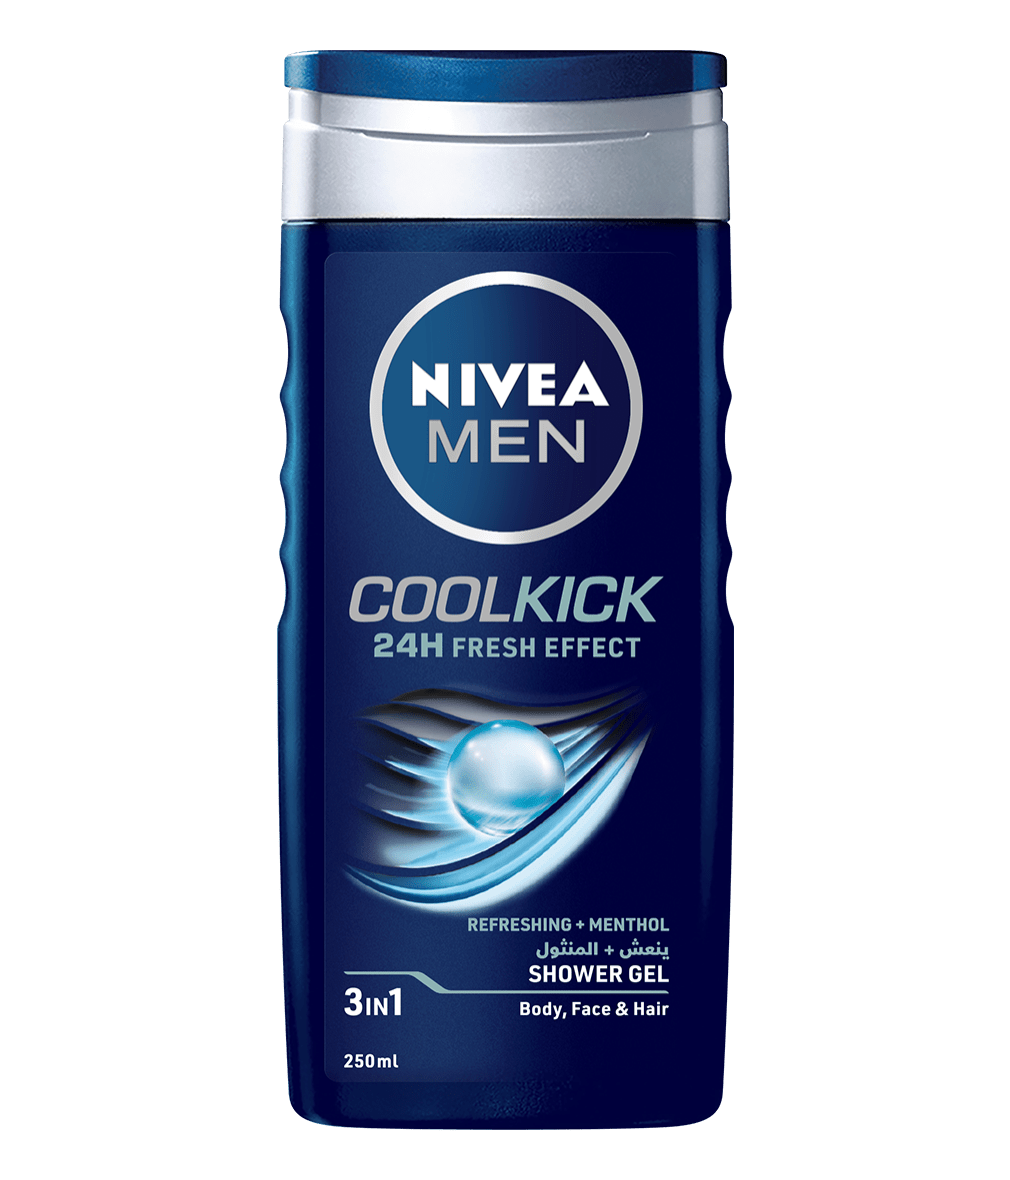 80702 Nivea Men Cool Kick shower gel 250ml clean packshot 